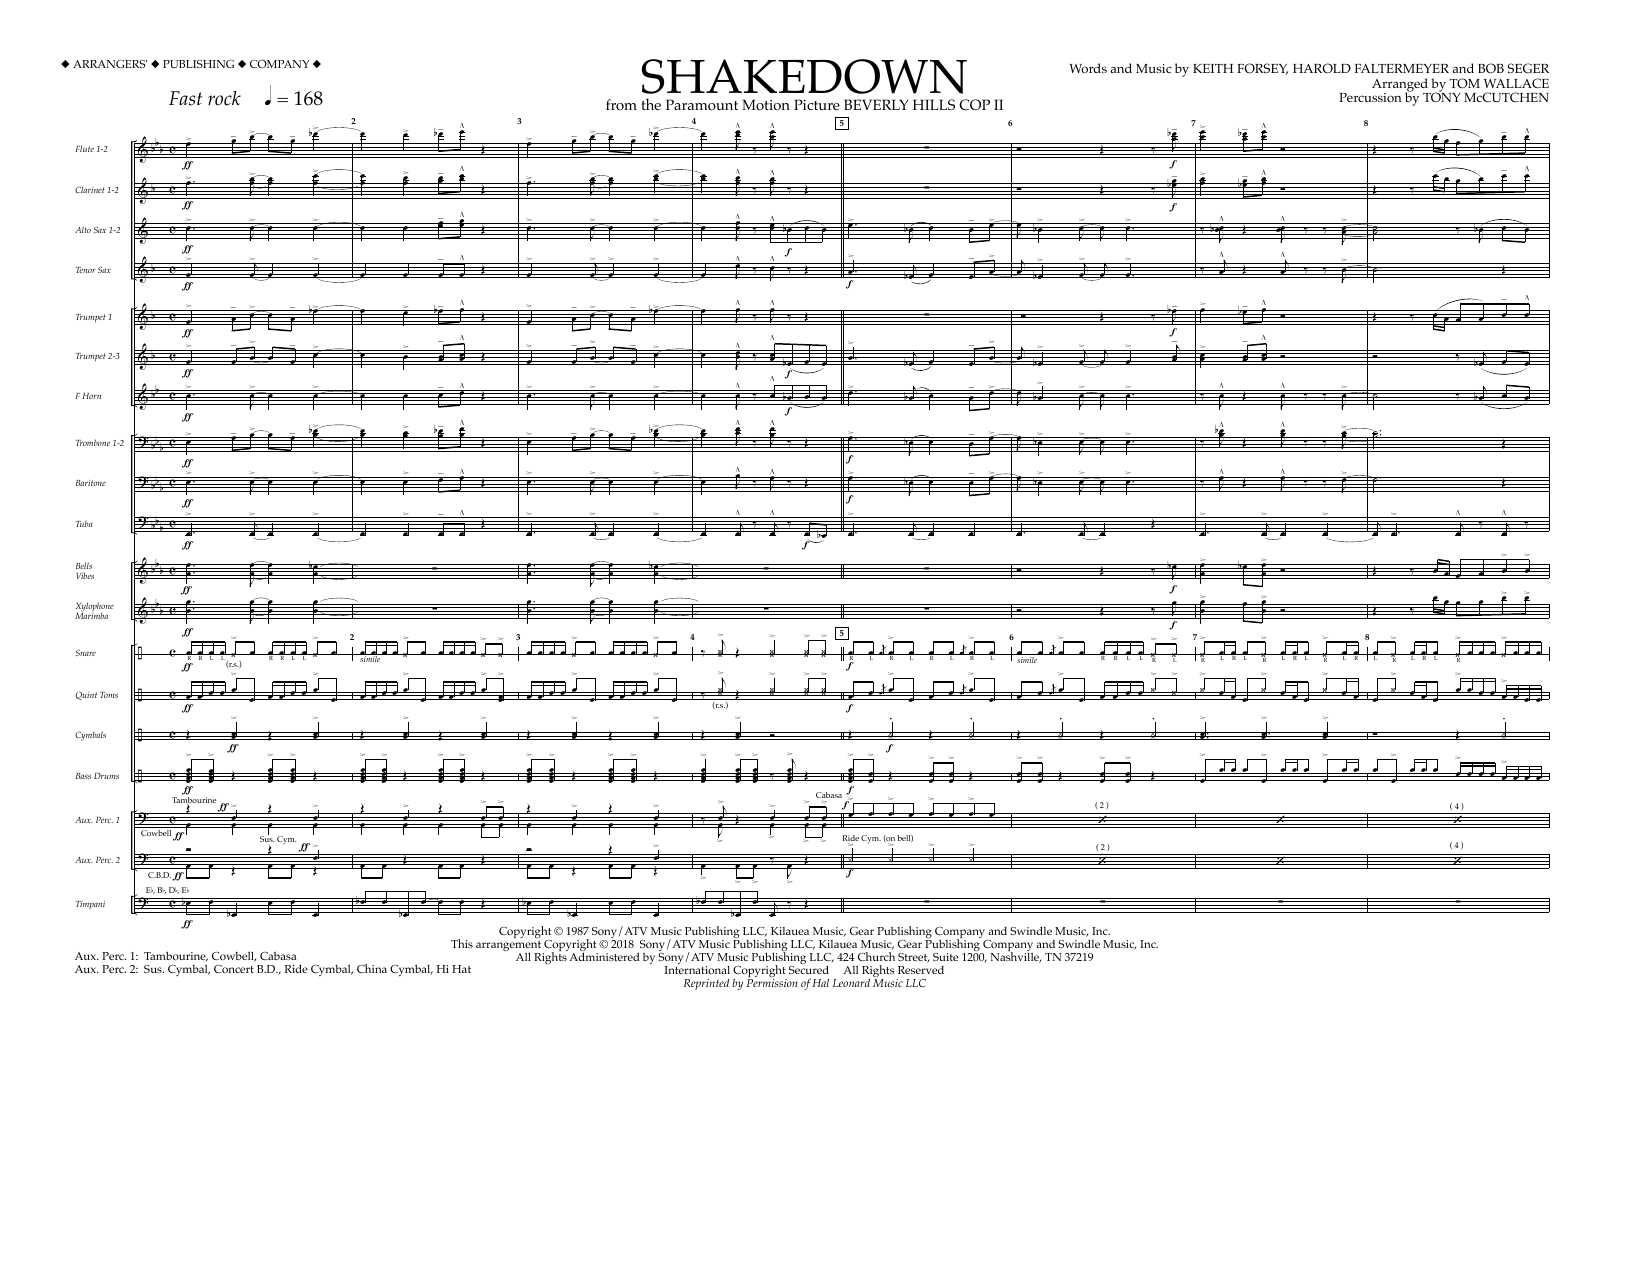 Download Tom Wallace Shakedown - Full Score Sheet Music